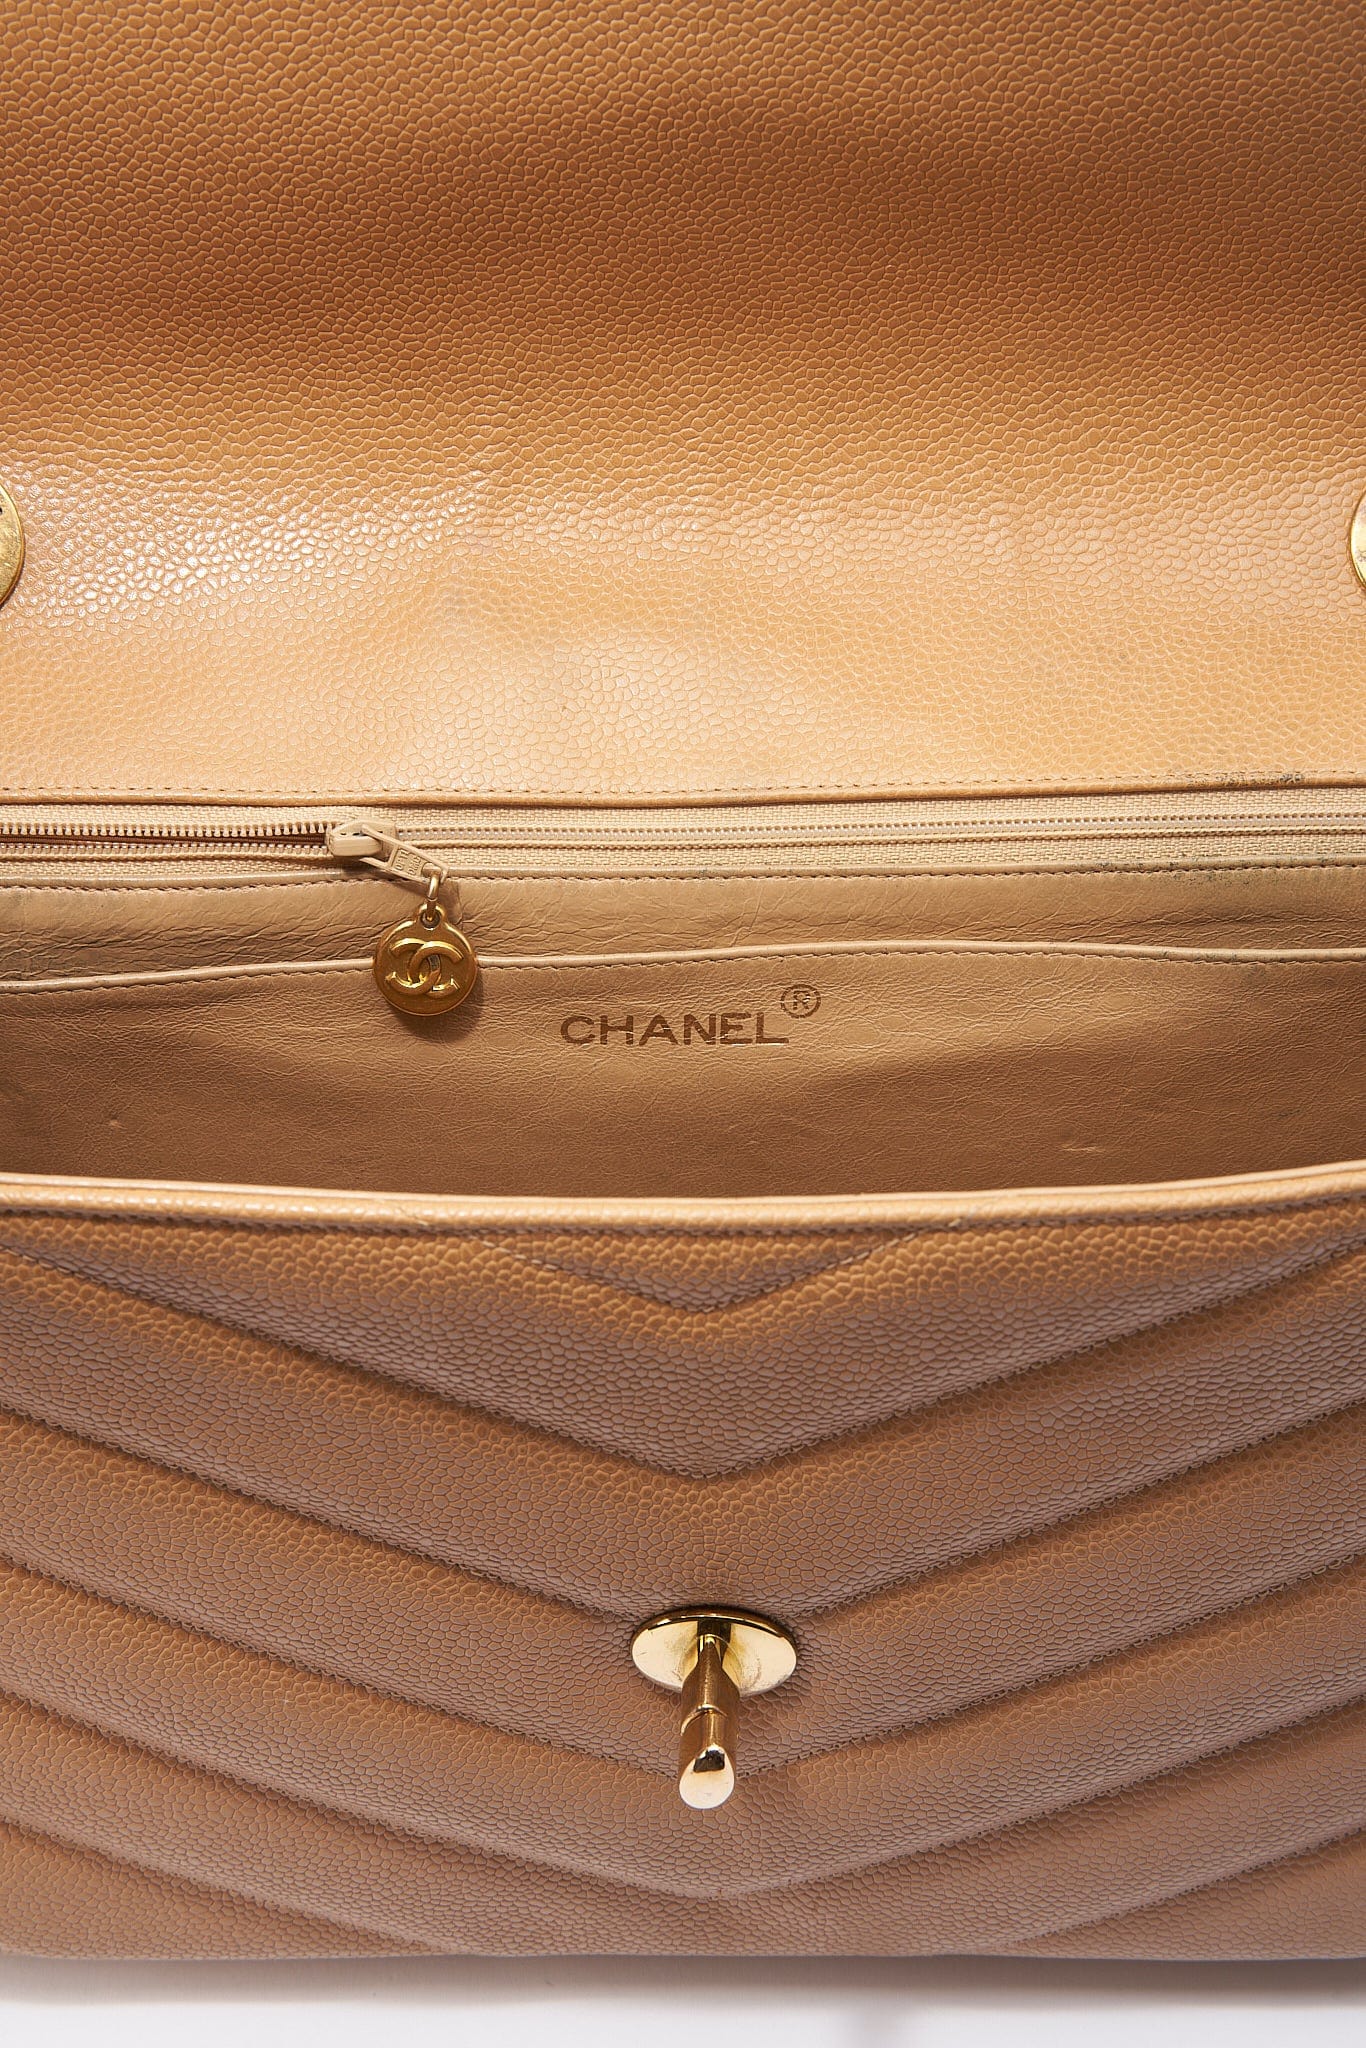 Chanel Jumbo Classic Flap Bag in Caviar Beige Leather